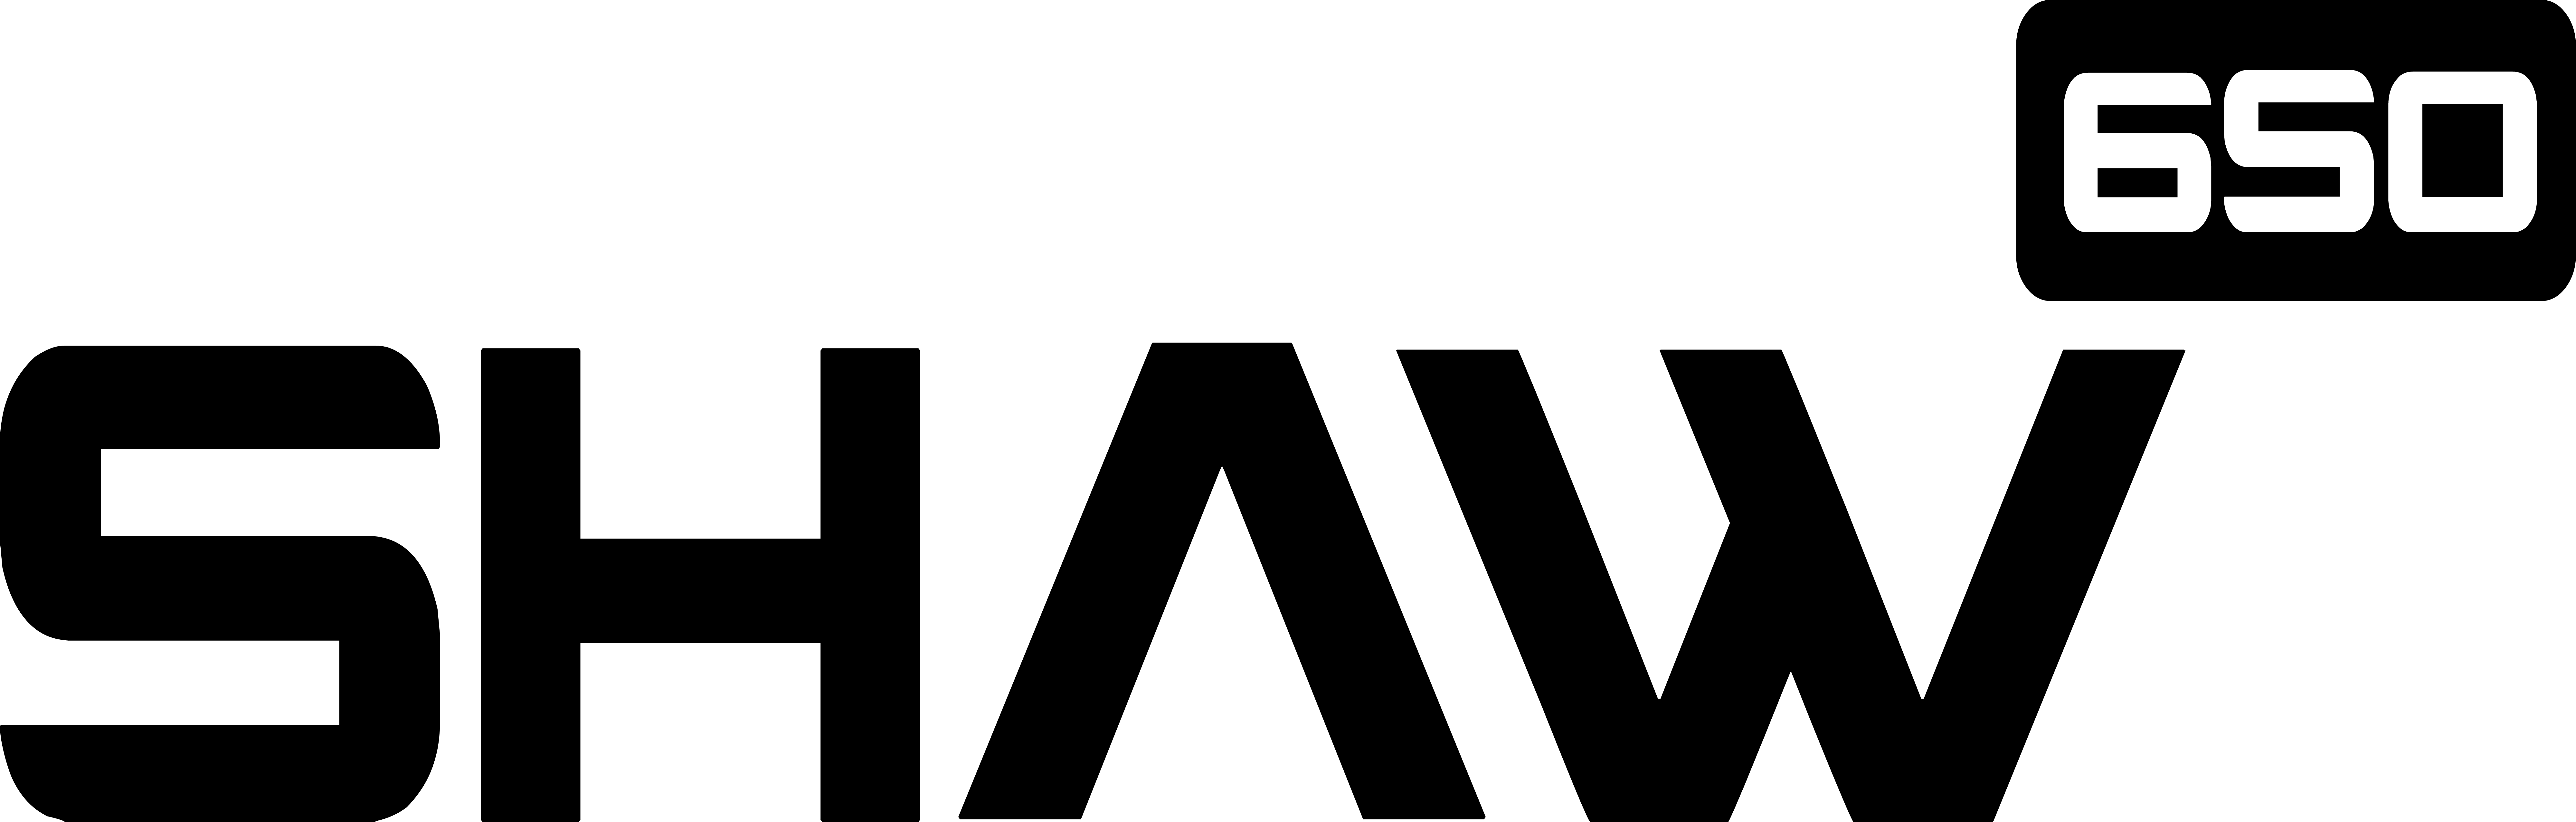 Black Shaw 650 logo